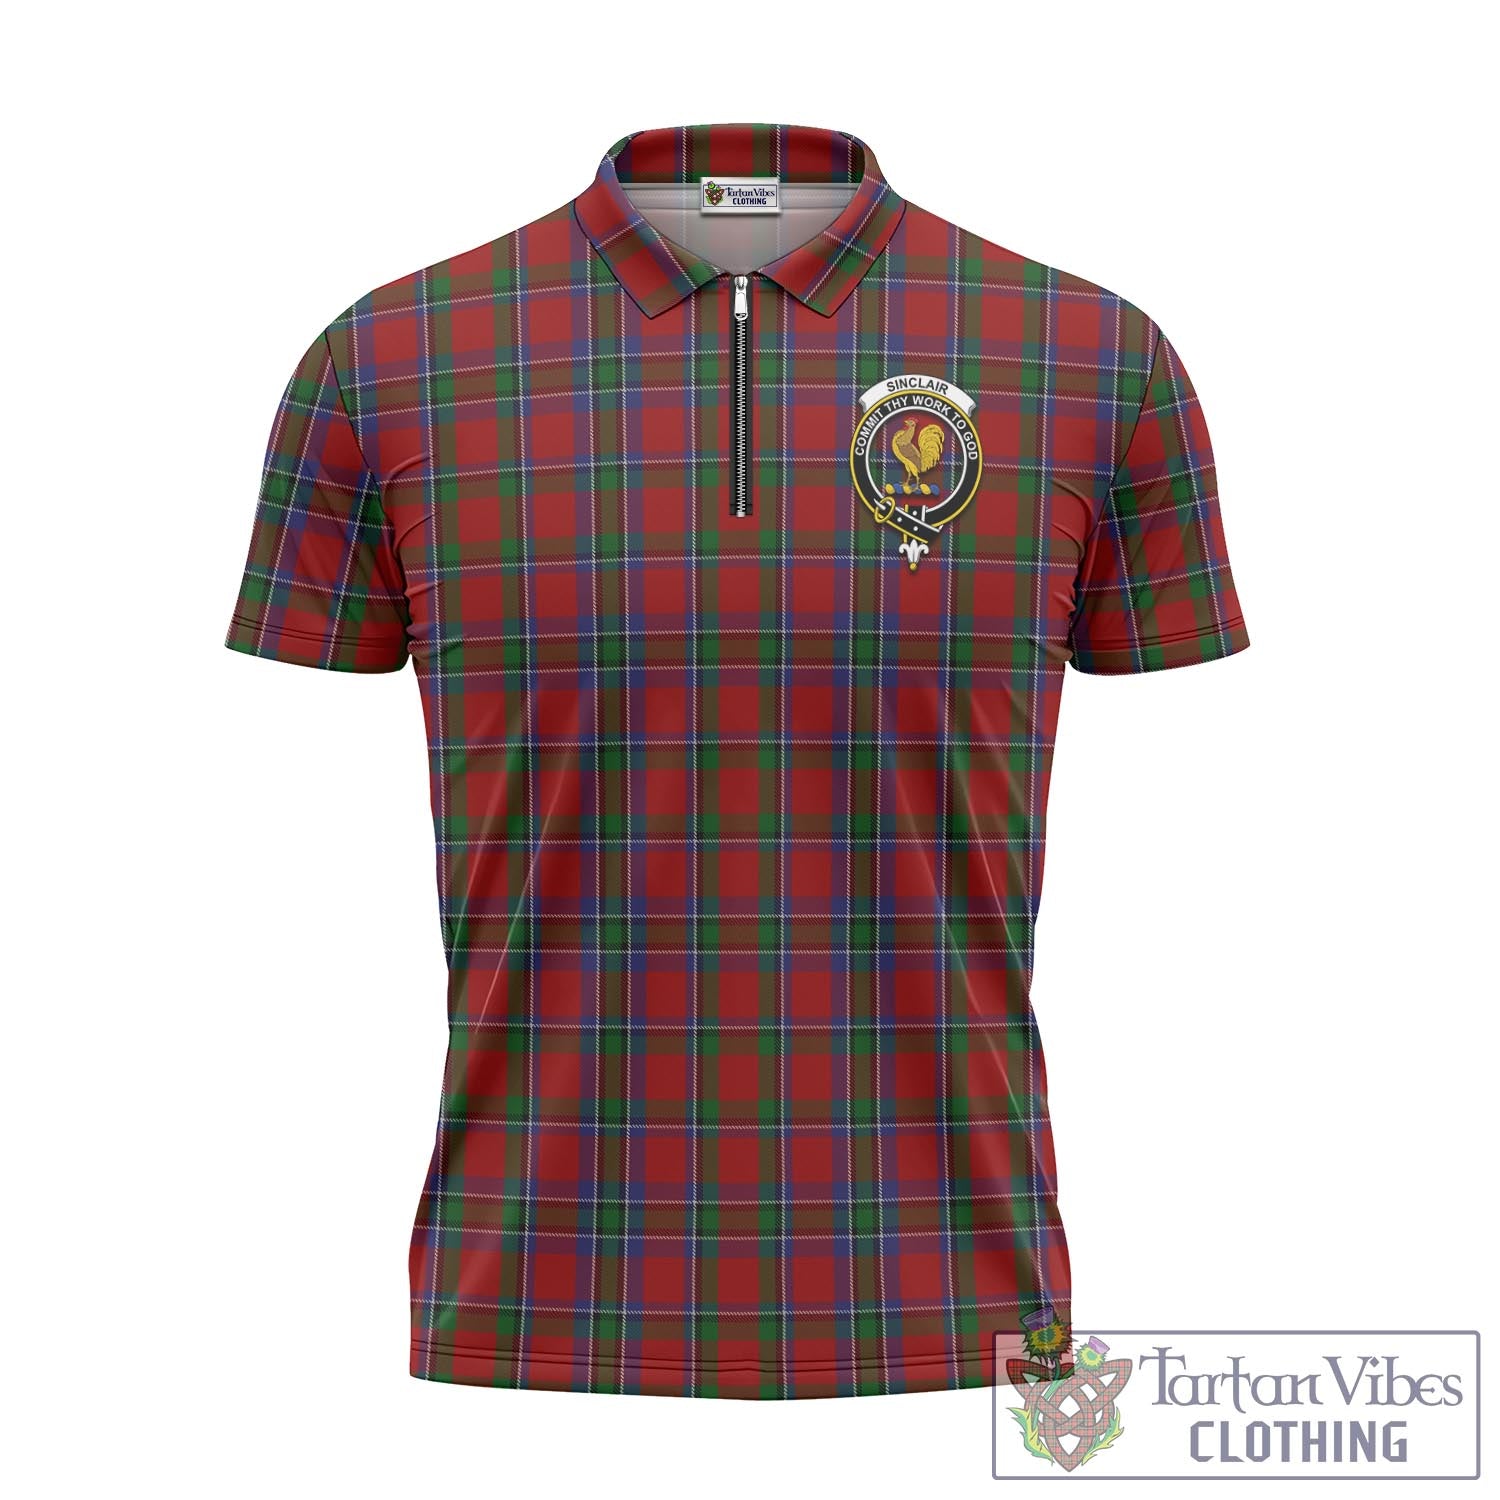 Tartan Vibes Clothing Sinclair Tartan Zipper Polo Shirt with Family Crest